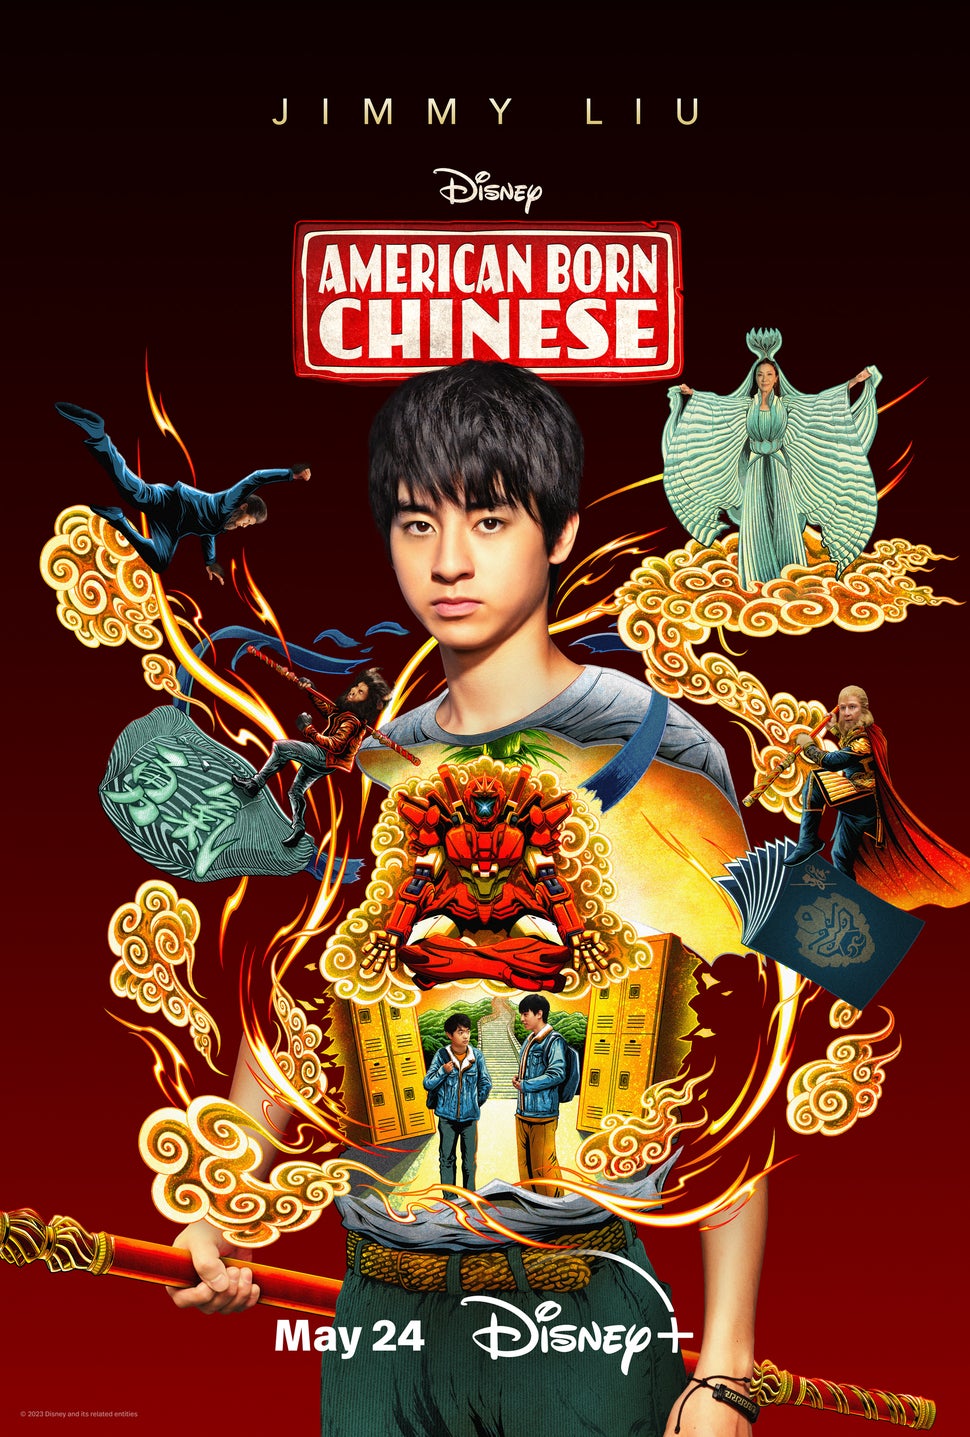 American Born Chinese Poster - Jimmy Liu